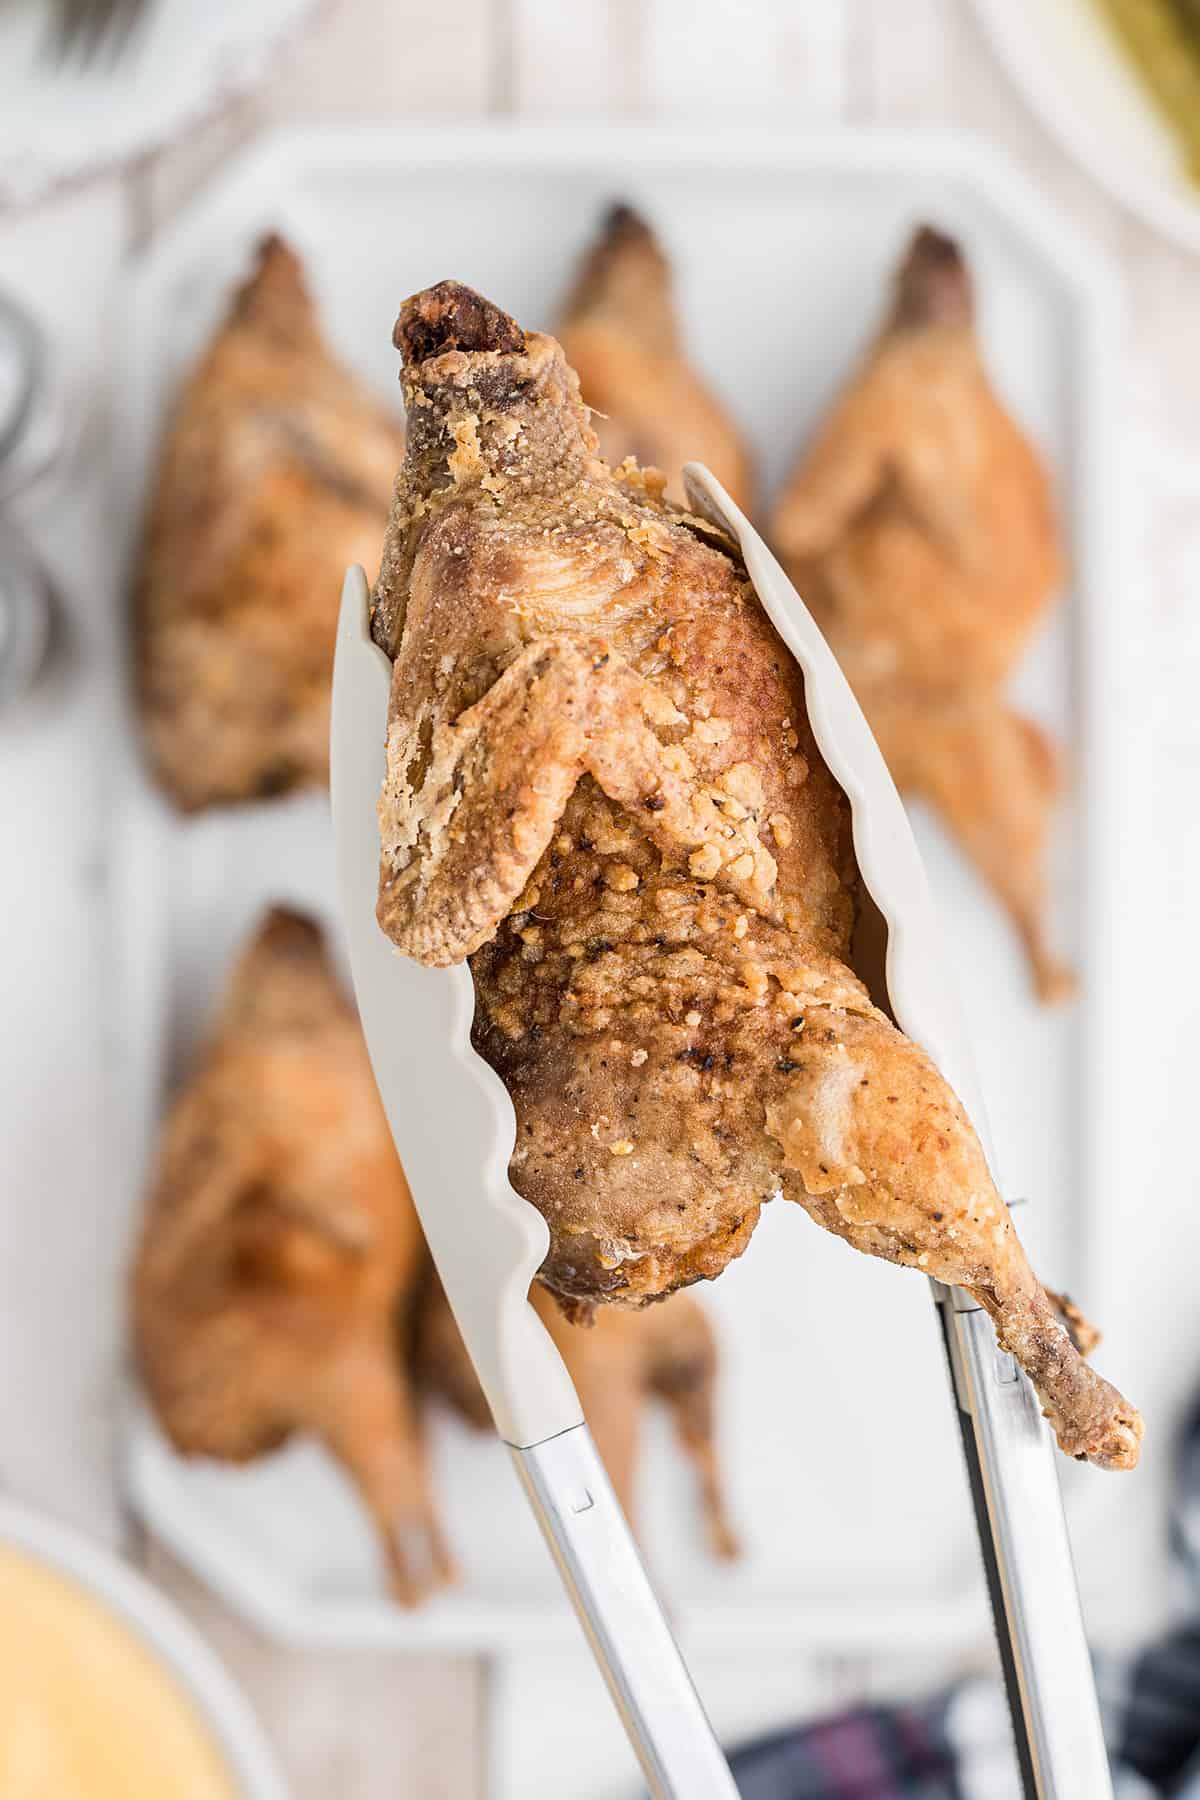 A single deep fried quail held in tongs.